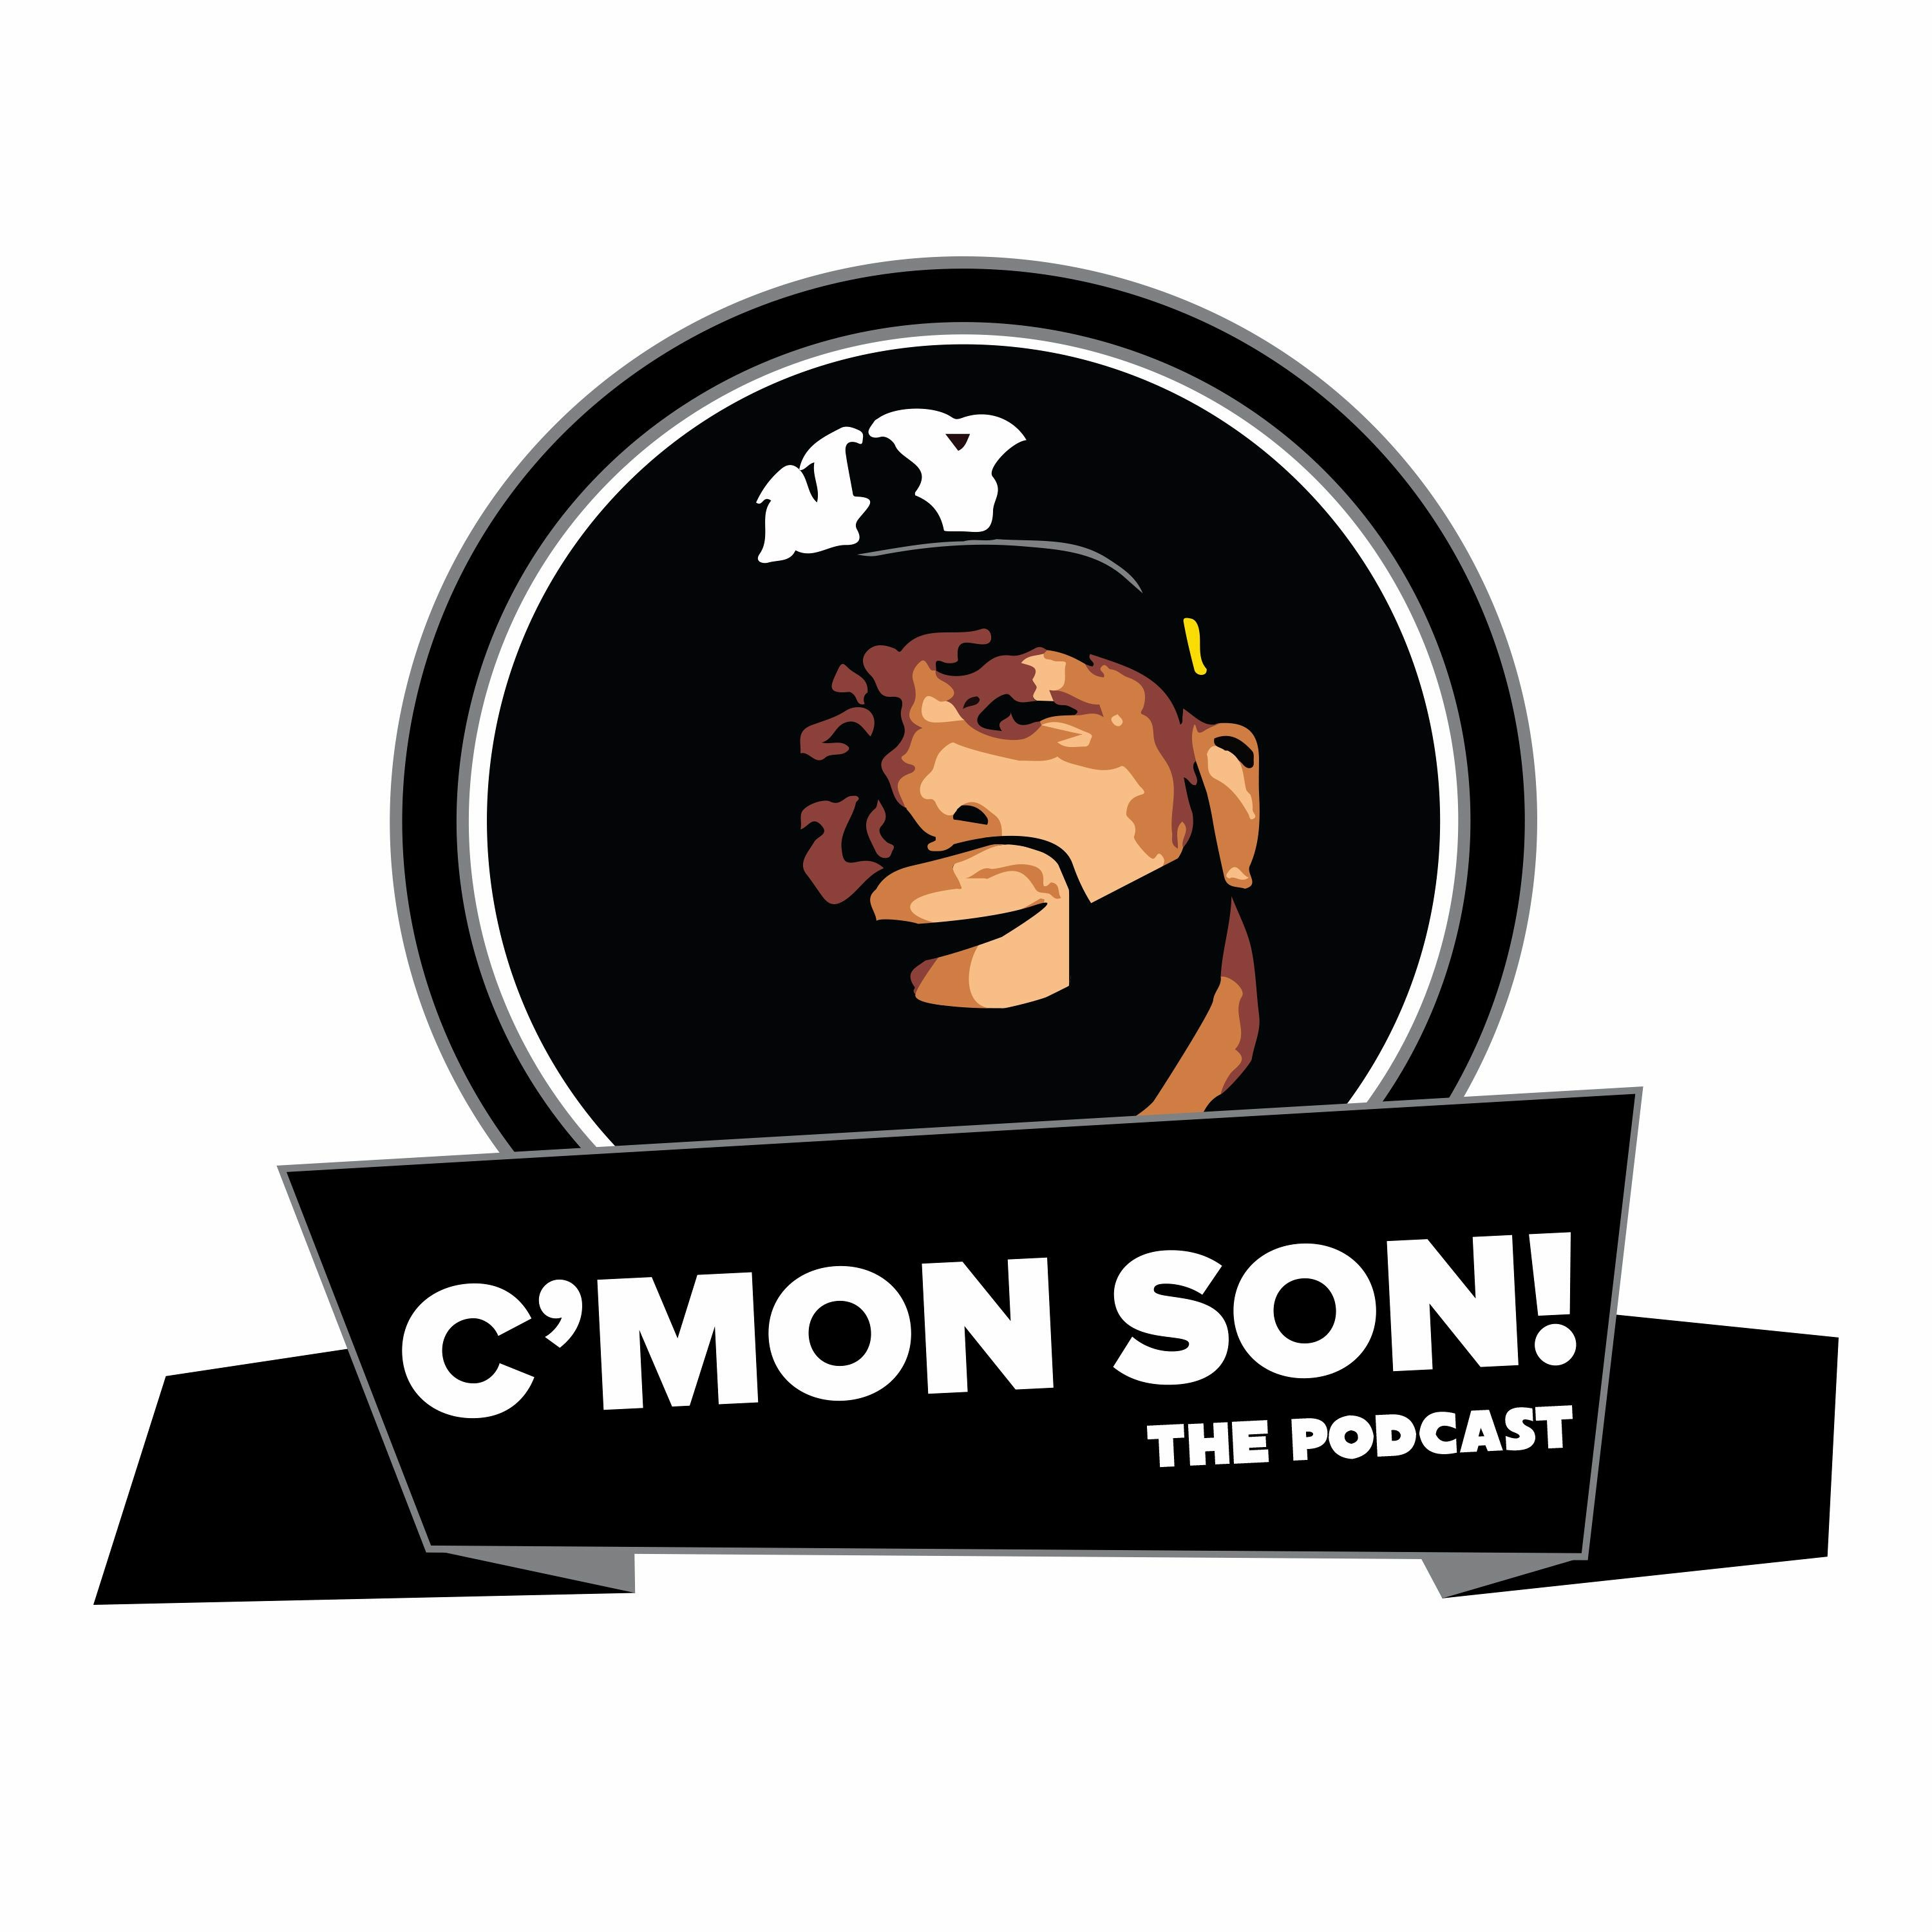 C'Mon Son! The Podcast Series #5 Episode #43: Tionne "T-Boz" Watkins of TLC